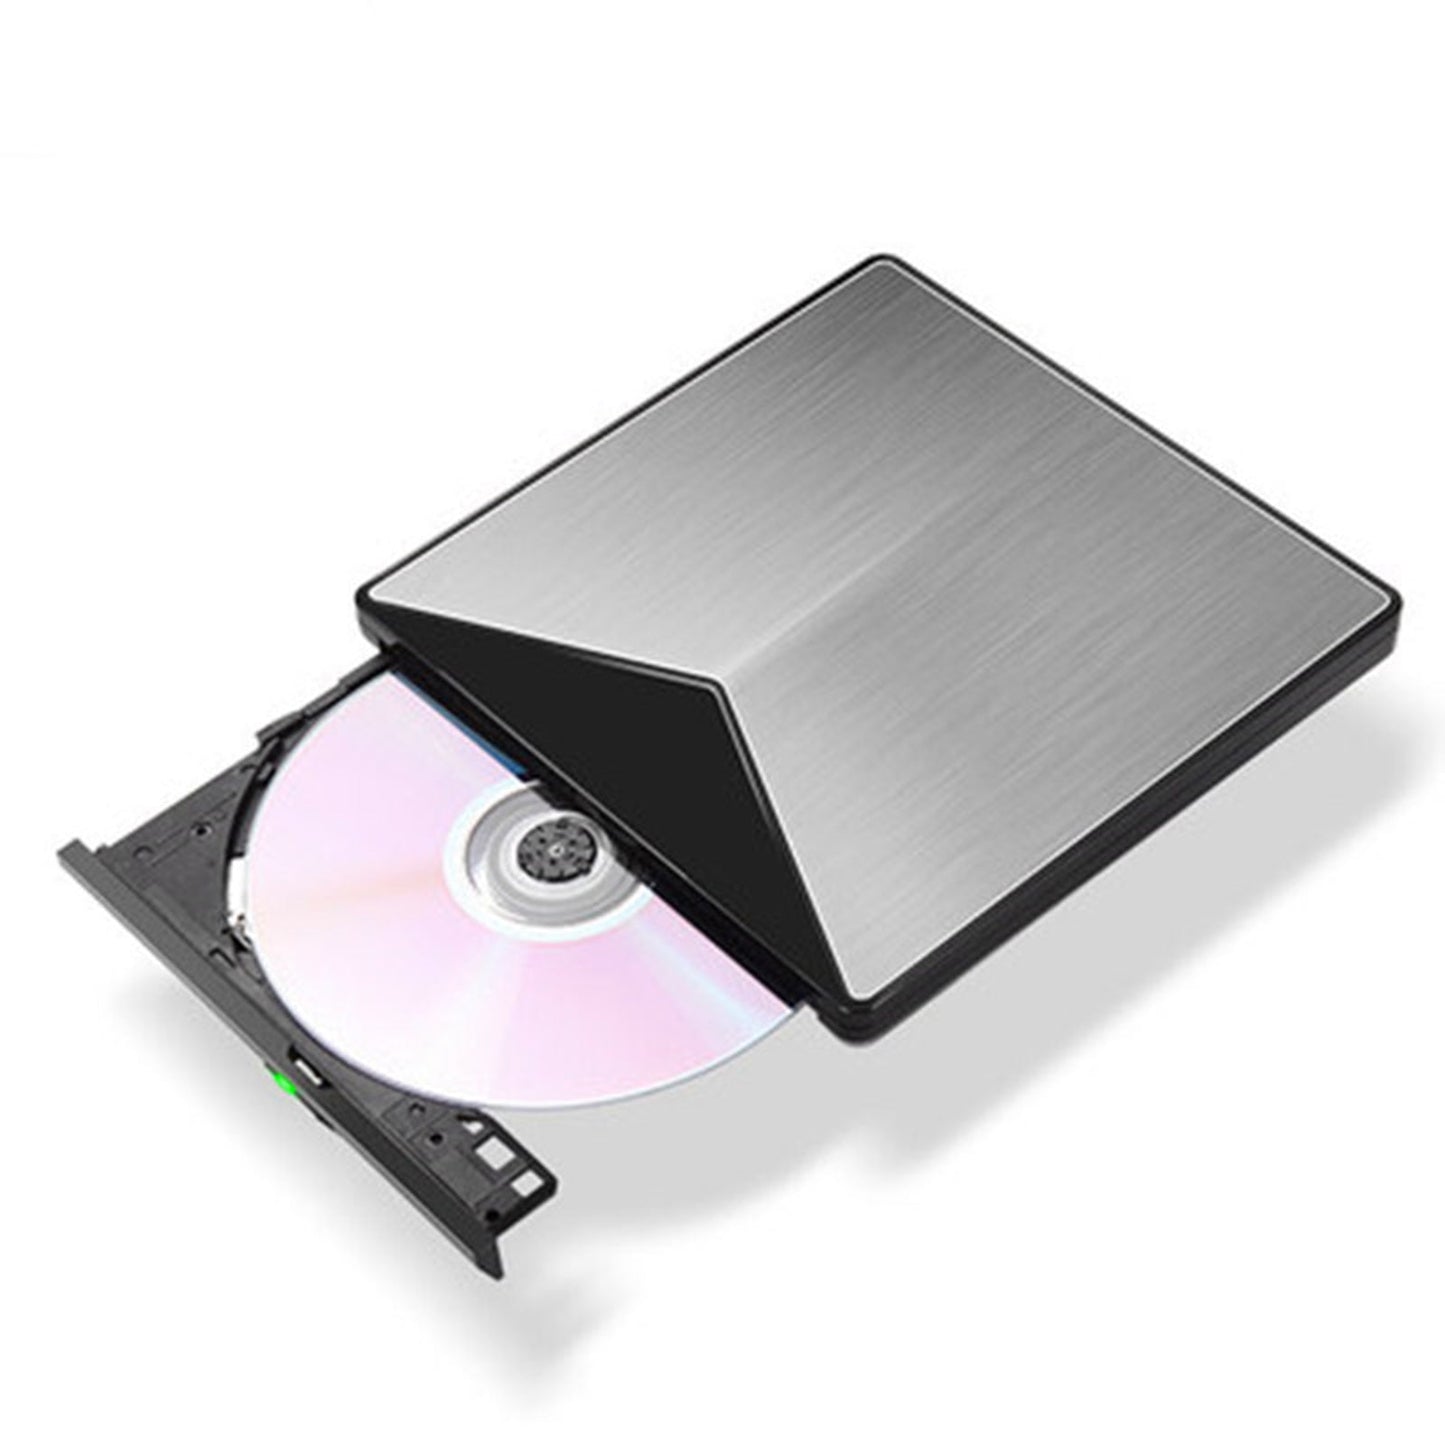 Blu-ray BD-Brenner Externes USB-Ultra-Slim-DVD-RW-CD-Brenner Tragbares Laufwerk